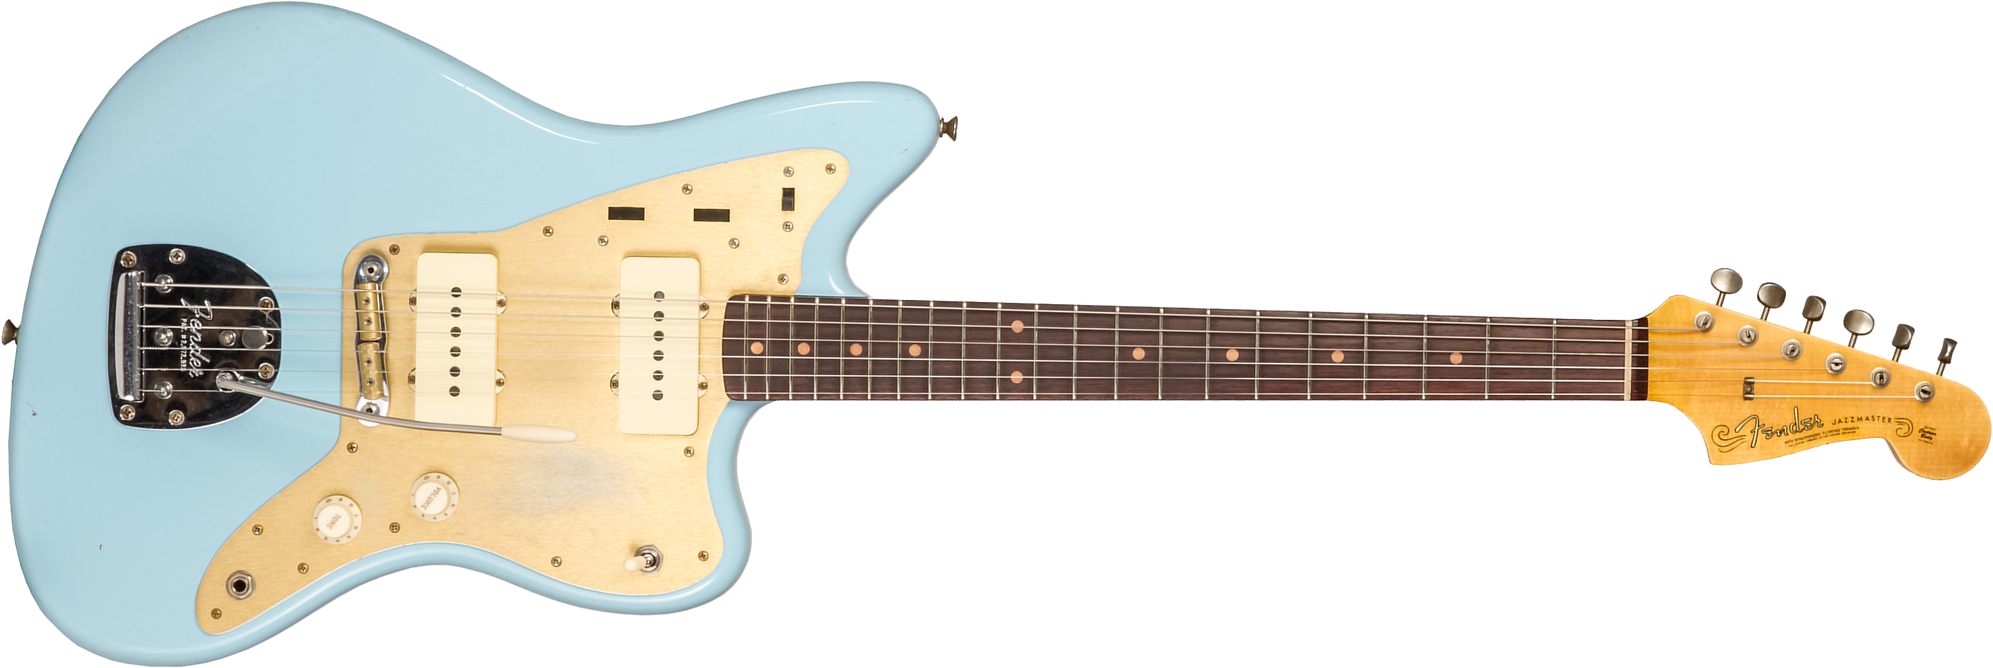 Fender Custom Shop Jazzmaster 1959 250k 2s Trem Rw #cz576203 - Journeyman Relic Aged Daphne Blue - Guitarra electrica retro rock - Main picture